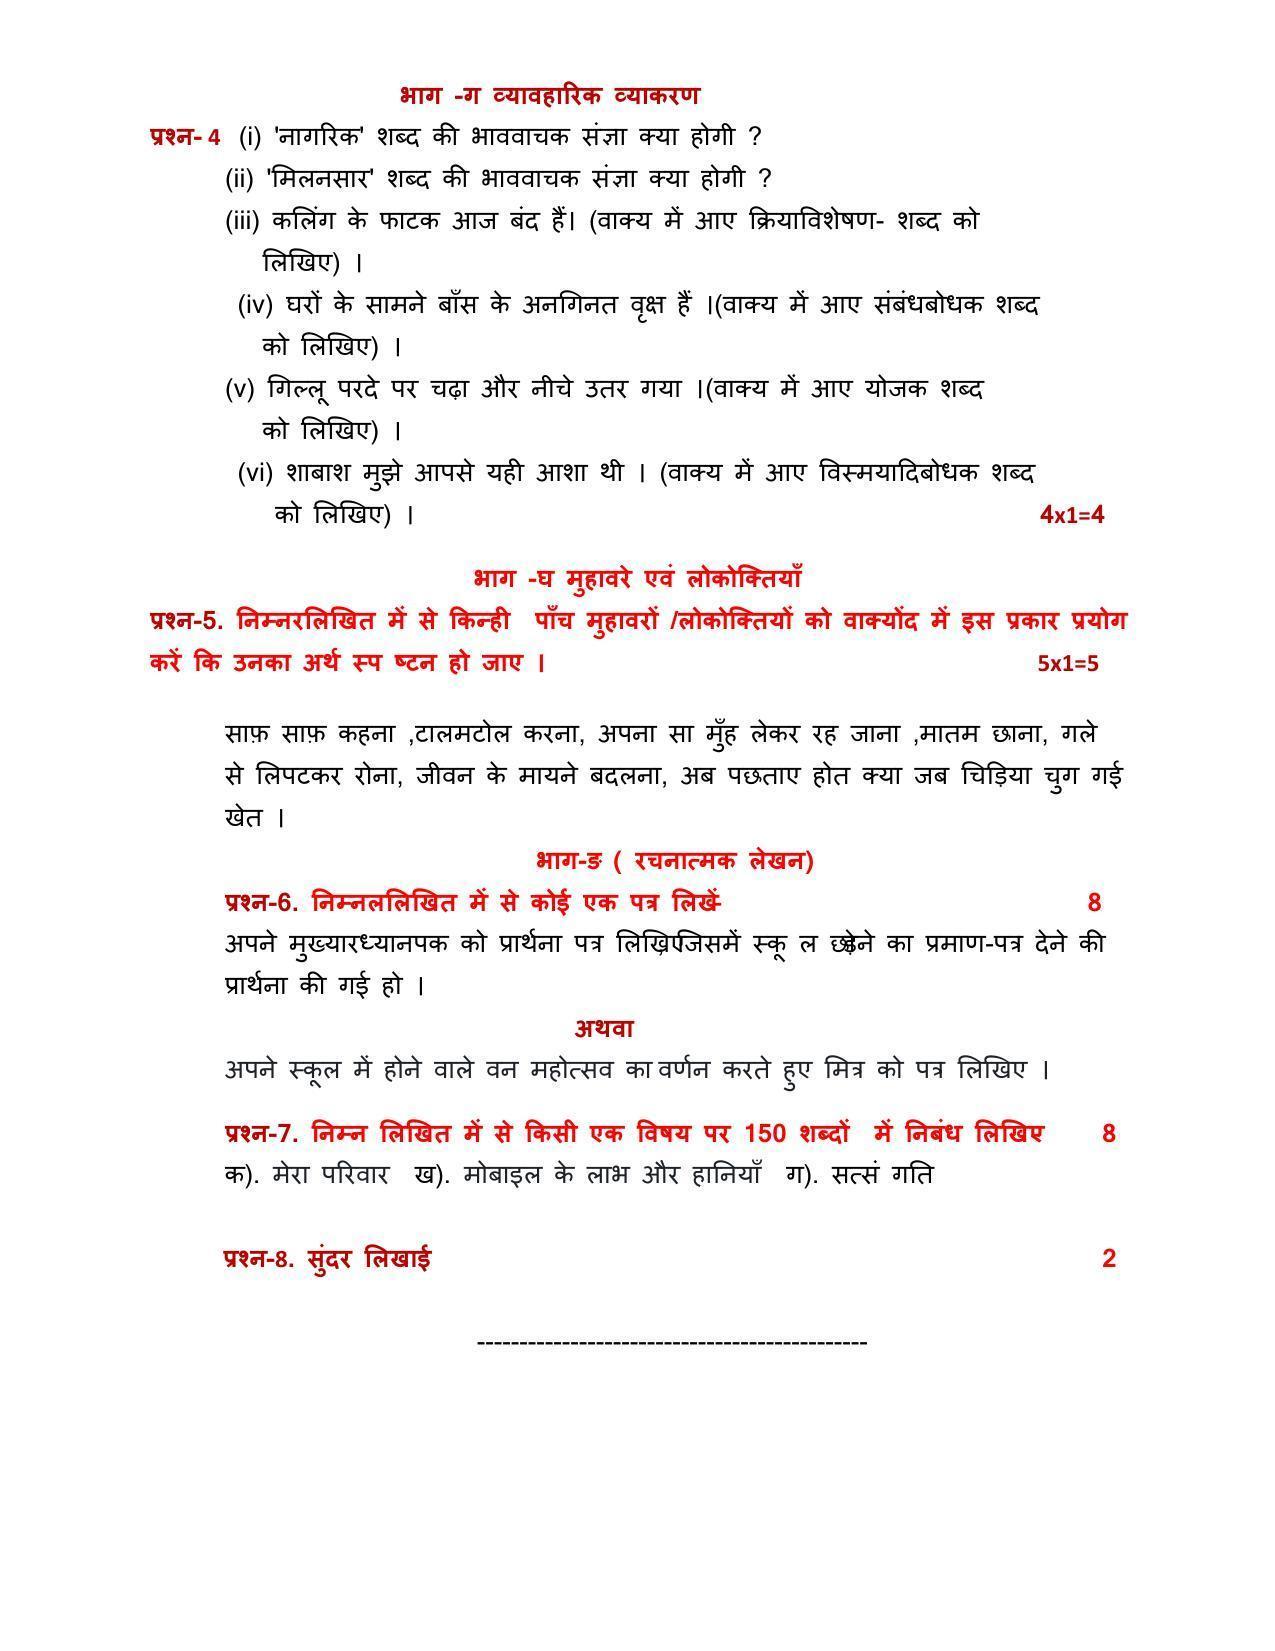 PSEB Class 8th (Term 2) Hindi Model Paper 2021-22 - Page 2